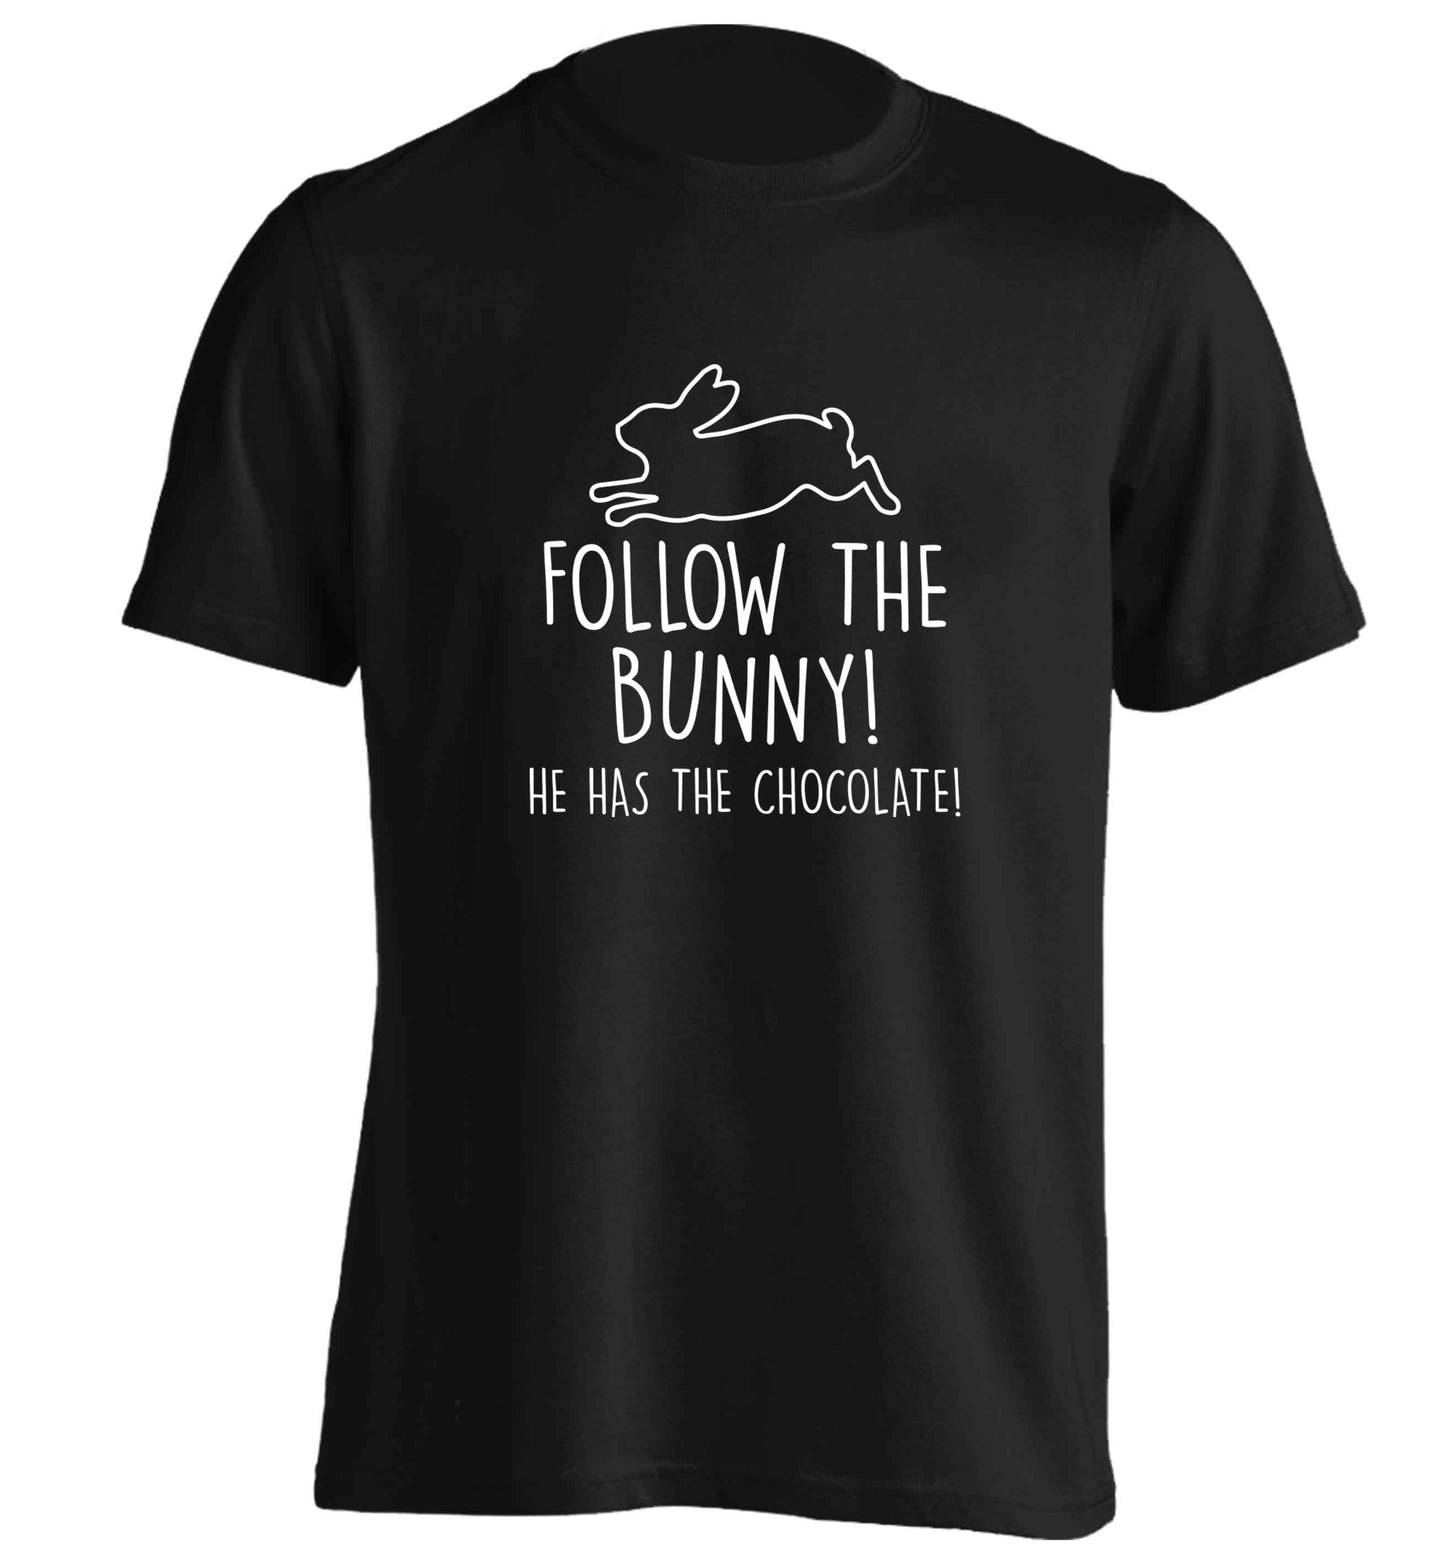 Follow the bunny! He has the chocolate adults unisex black Tshirt 2XL